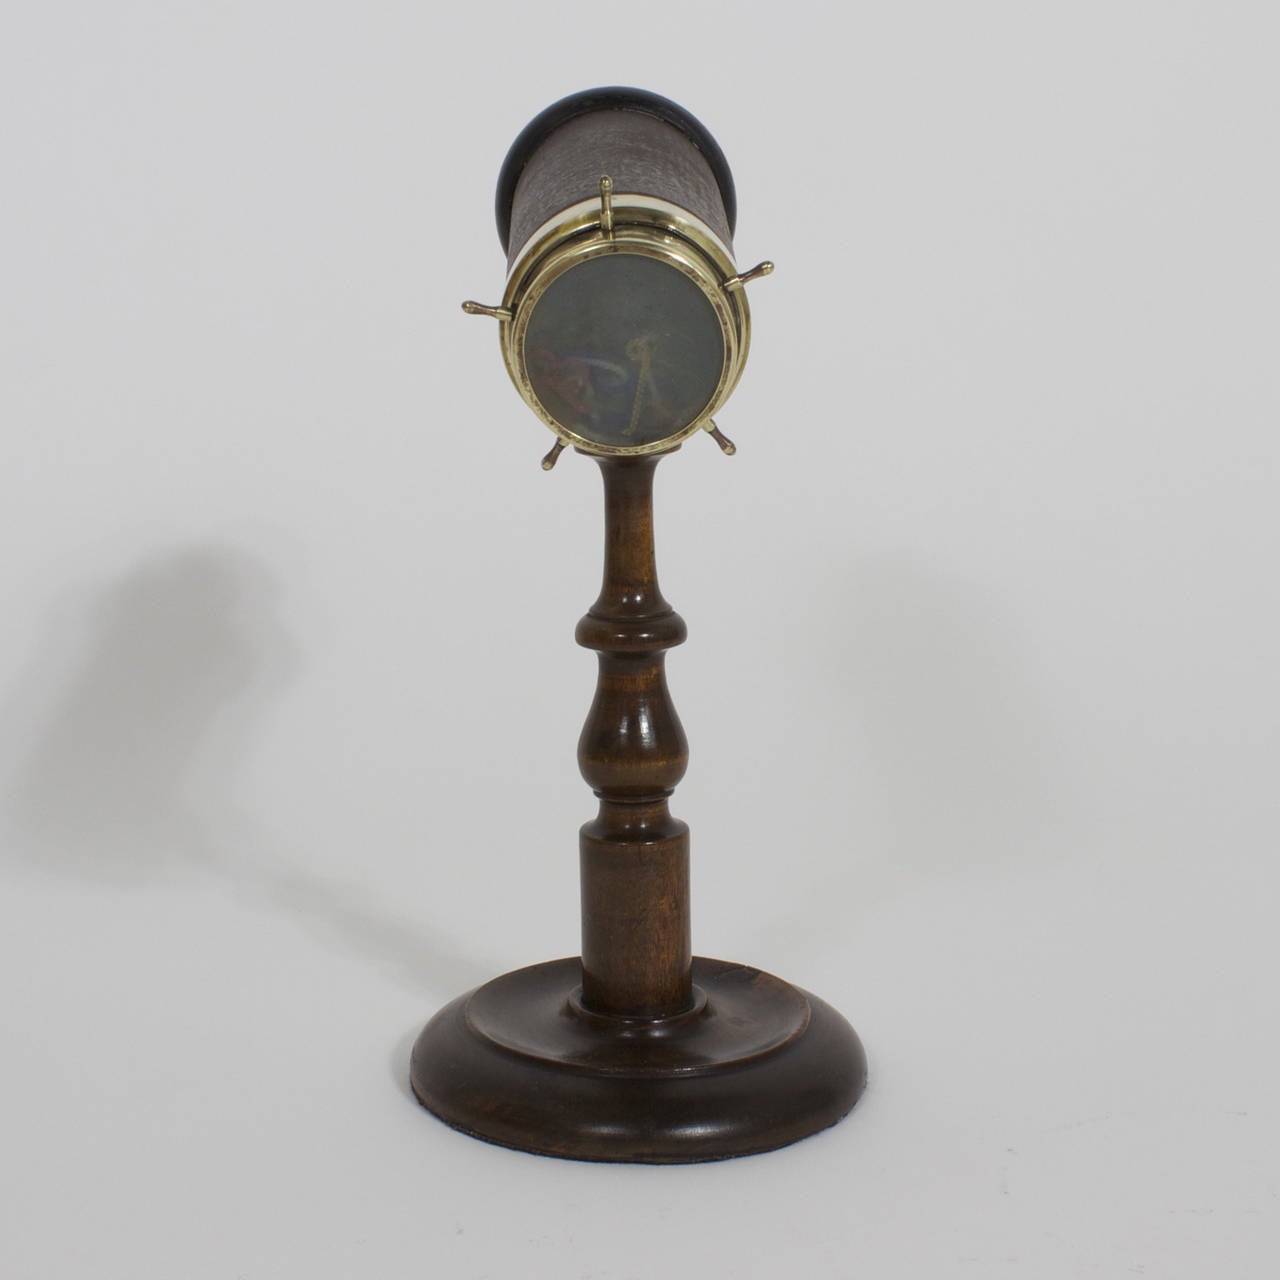 antique kaleidoscope for sale uk